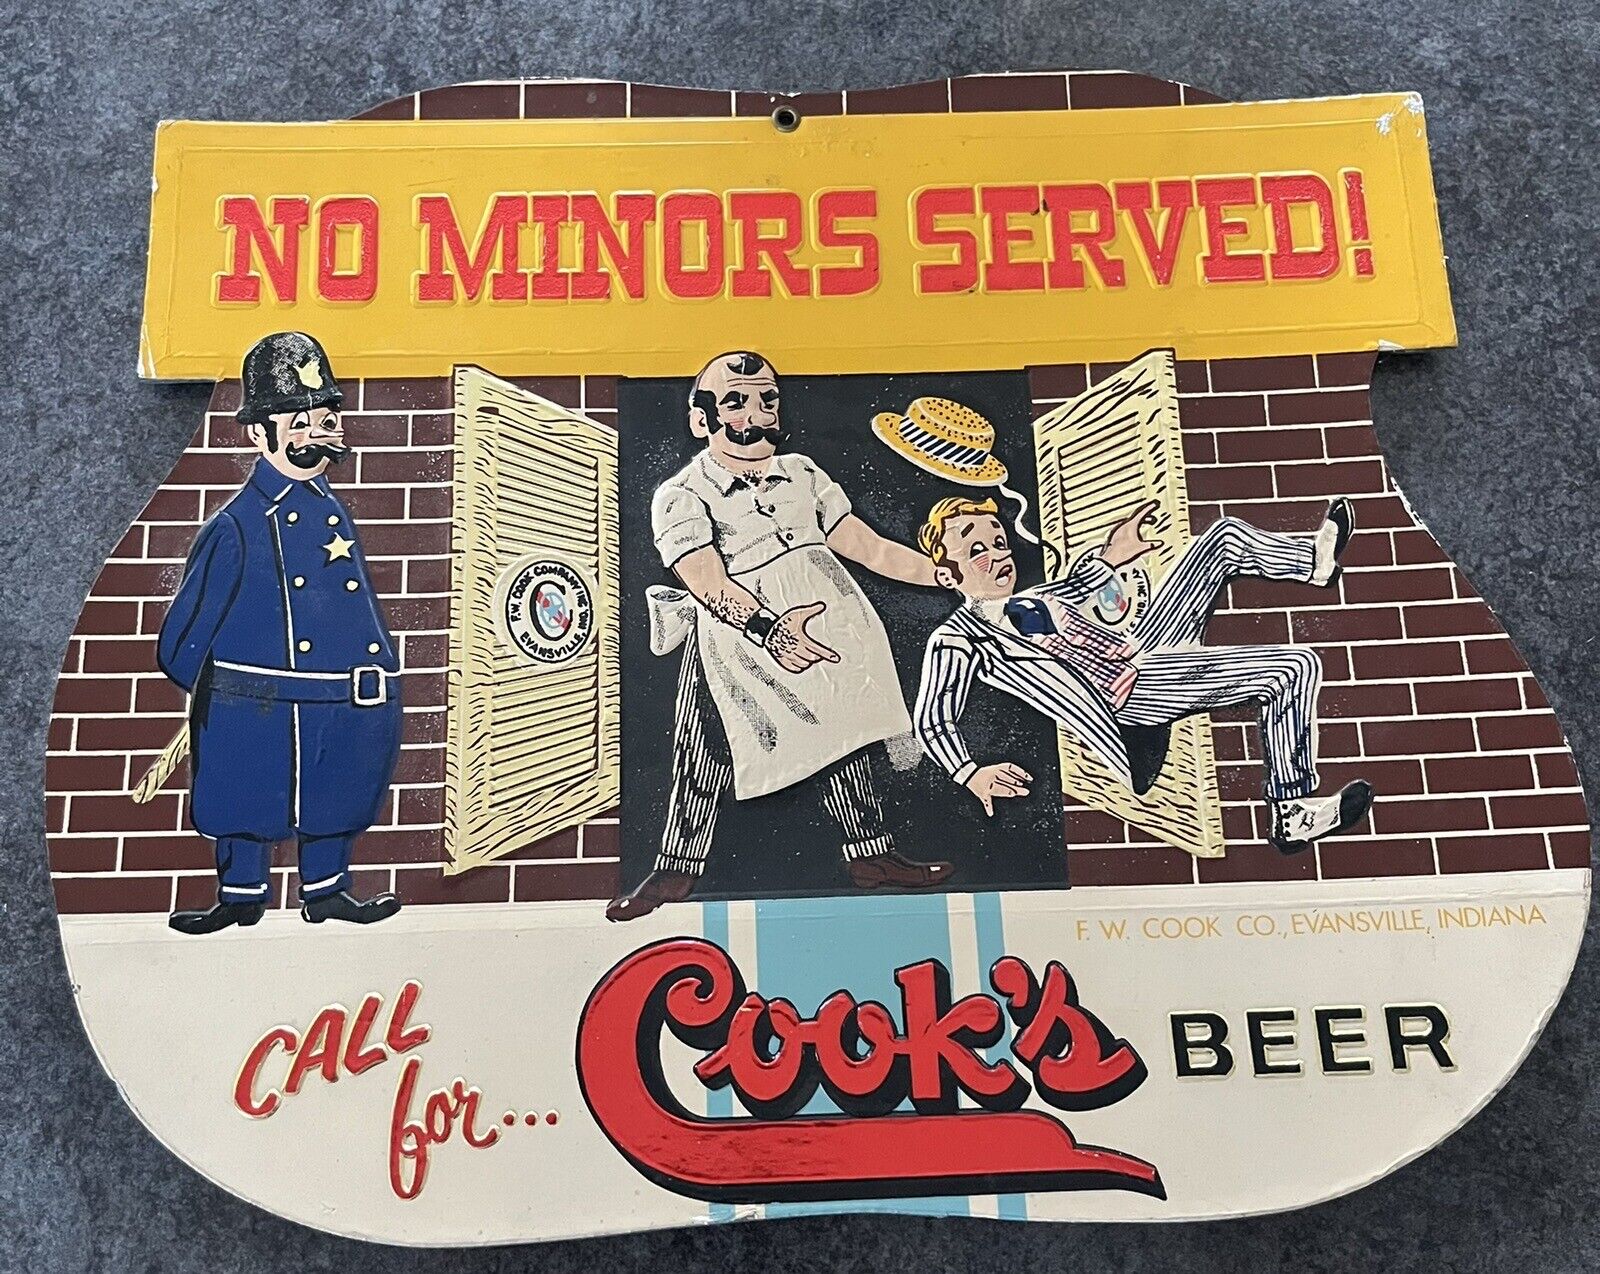 Vintage Call For Cooks Beer. No Minors Served Metal Foil Over Pressed Board Sign